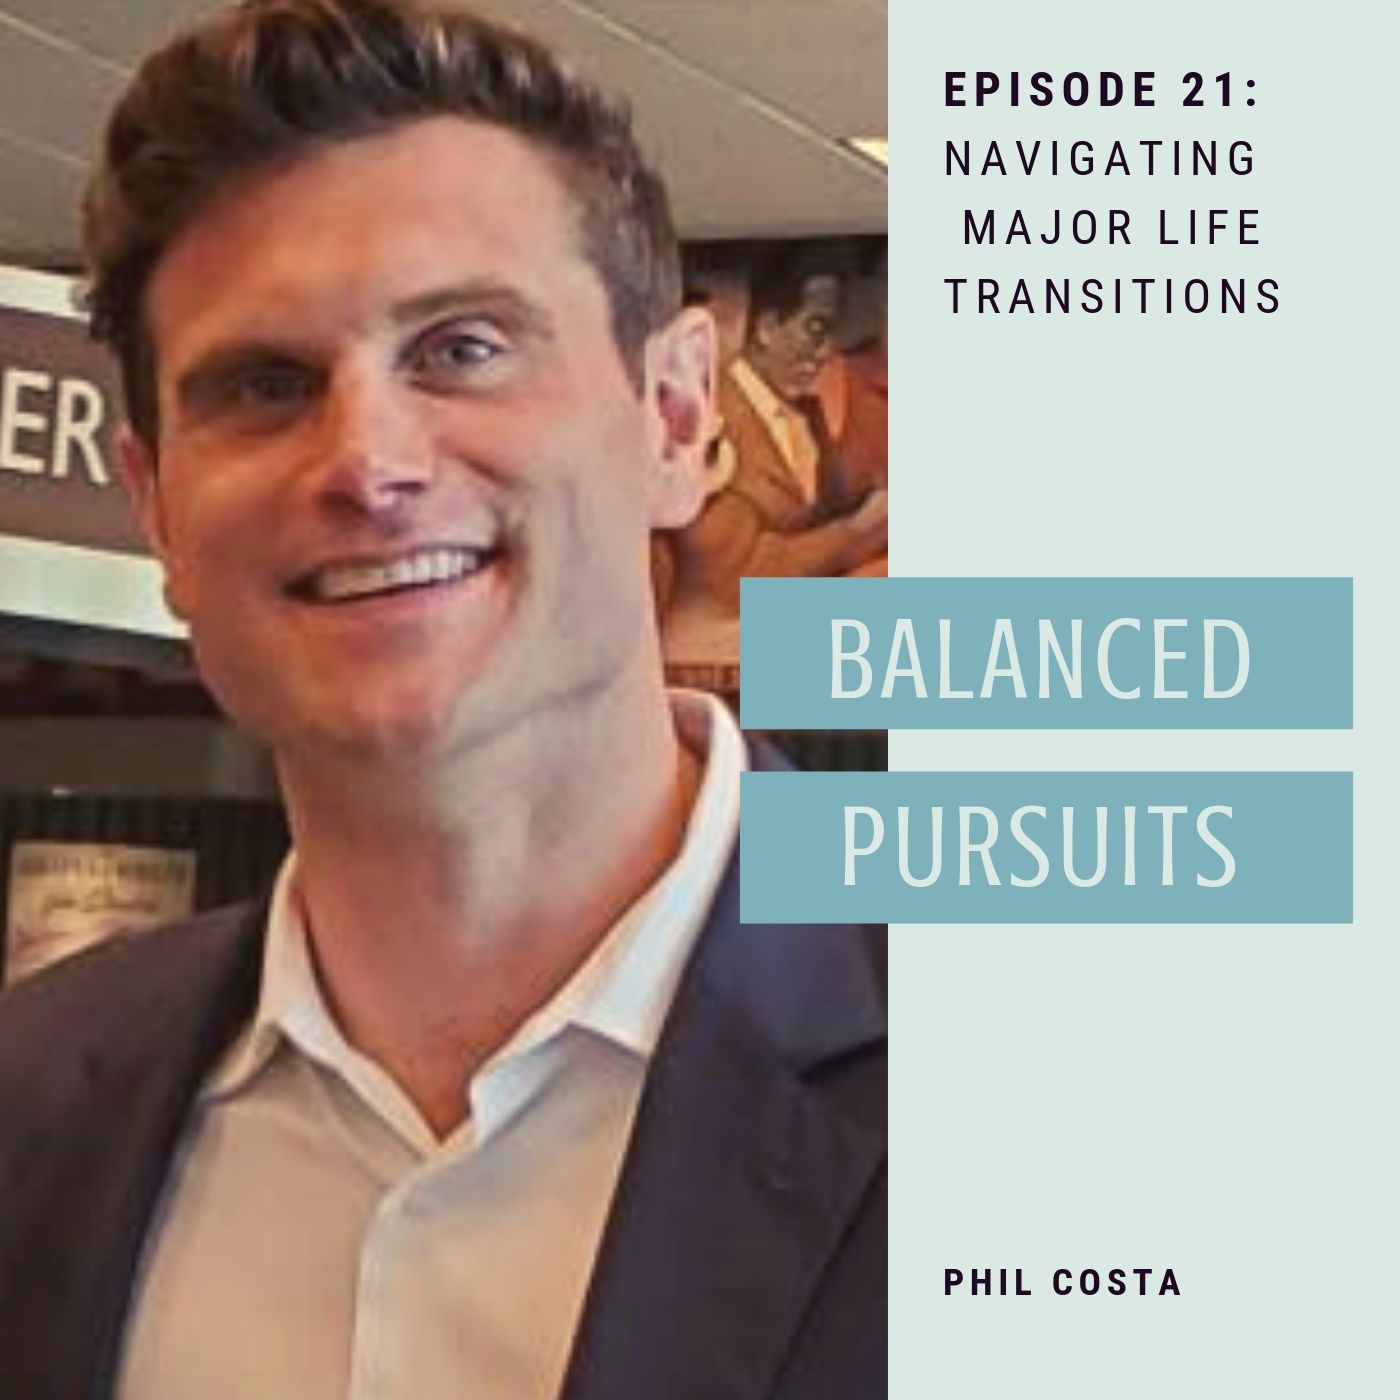 Episode 21: Phil Costa - Navigating Major Life Transitions